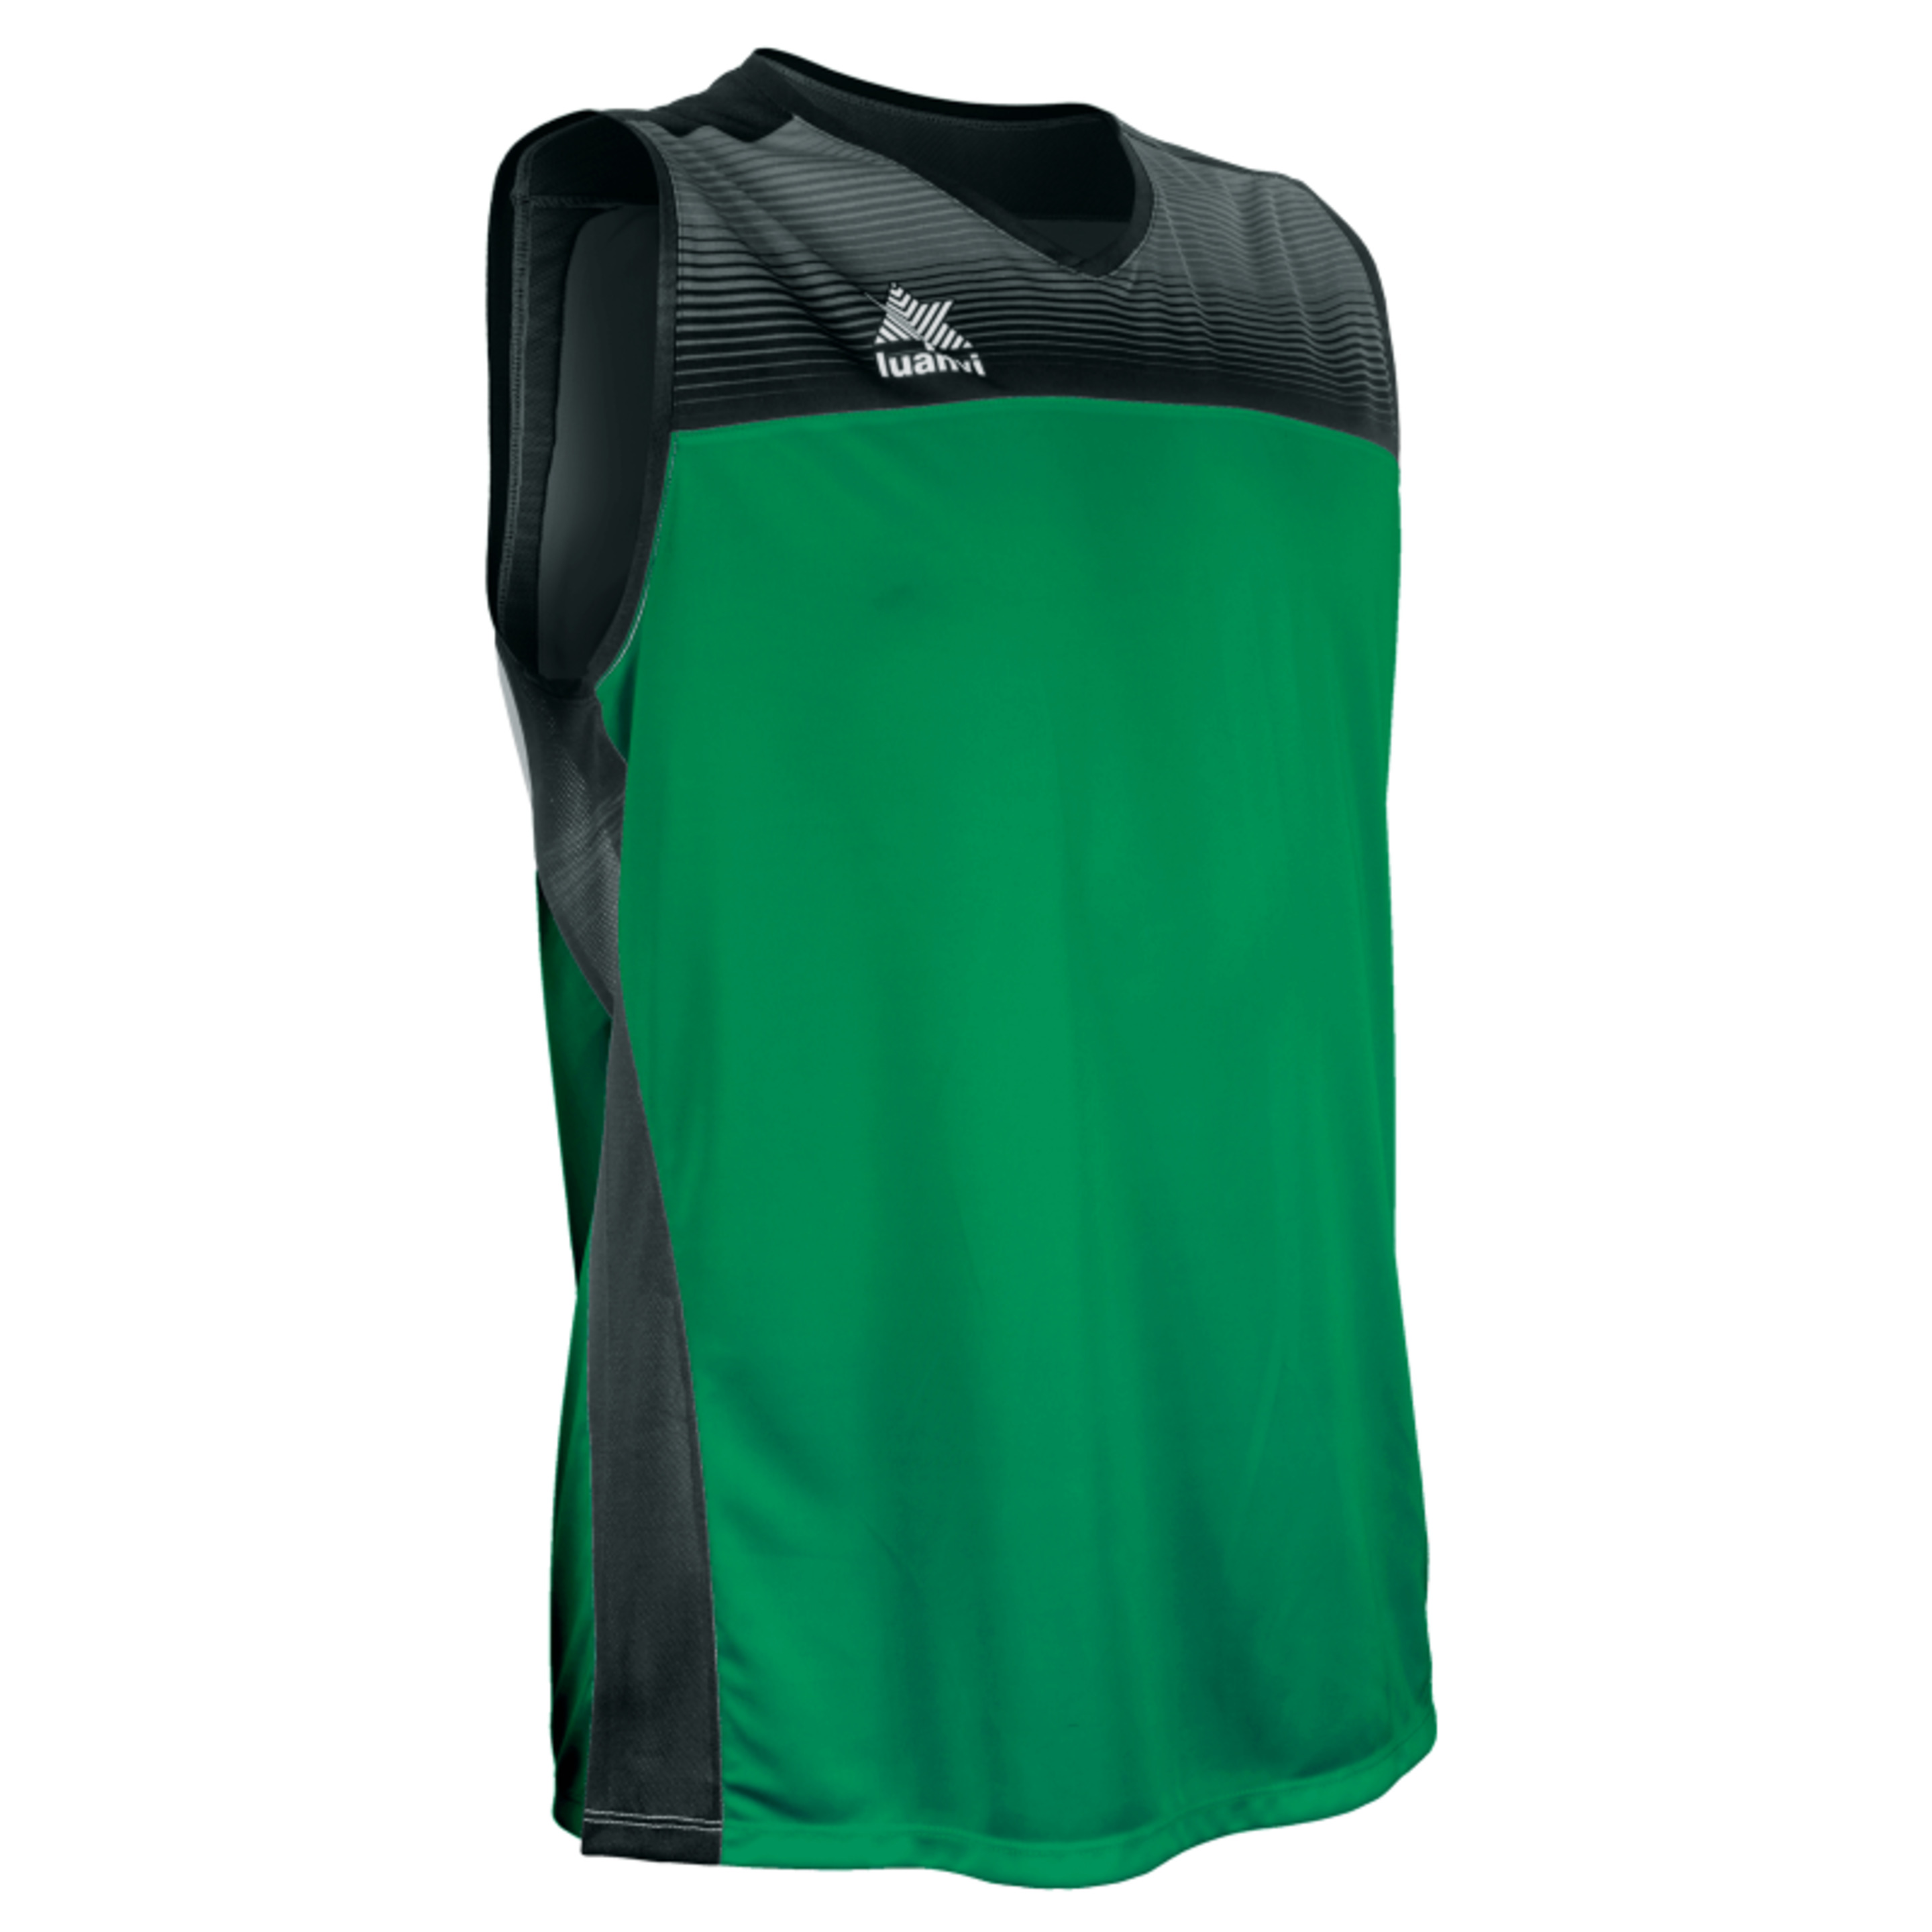 Camiseta Sin Mangas Basket Portland - Verde/Negro  MKP